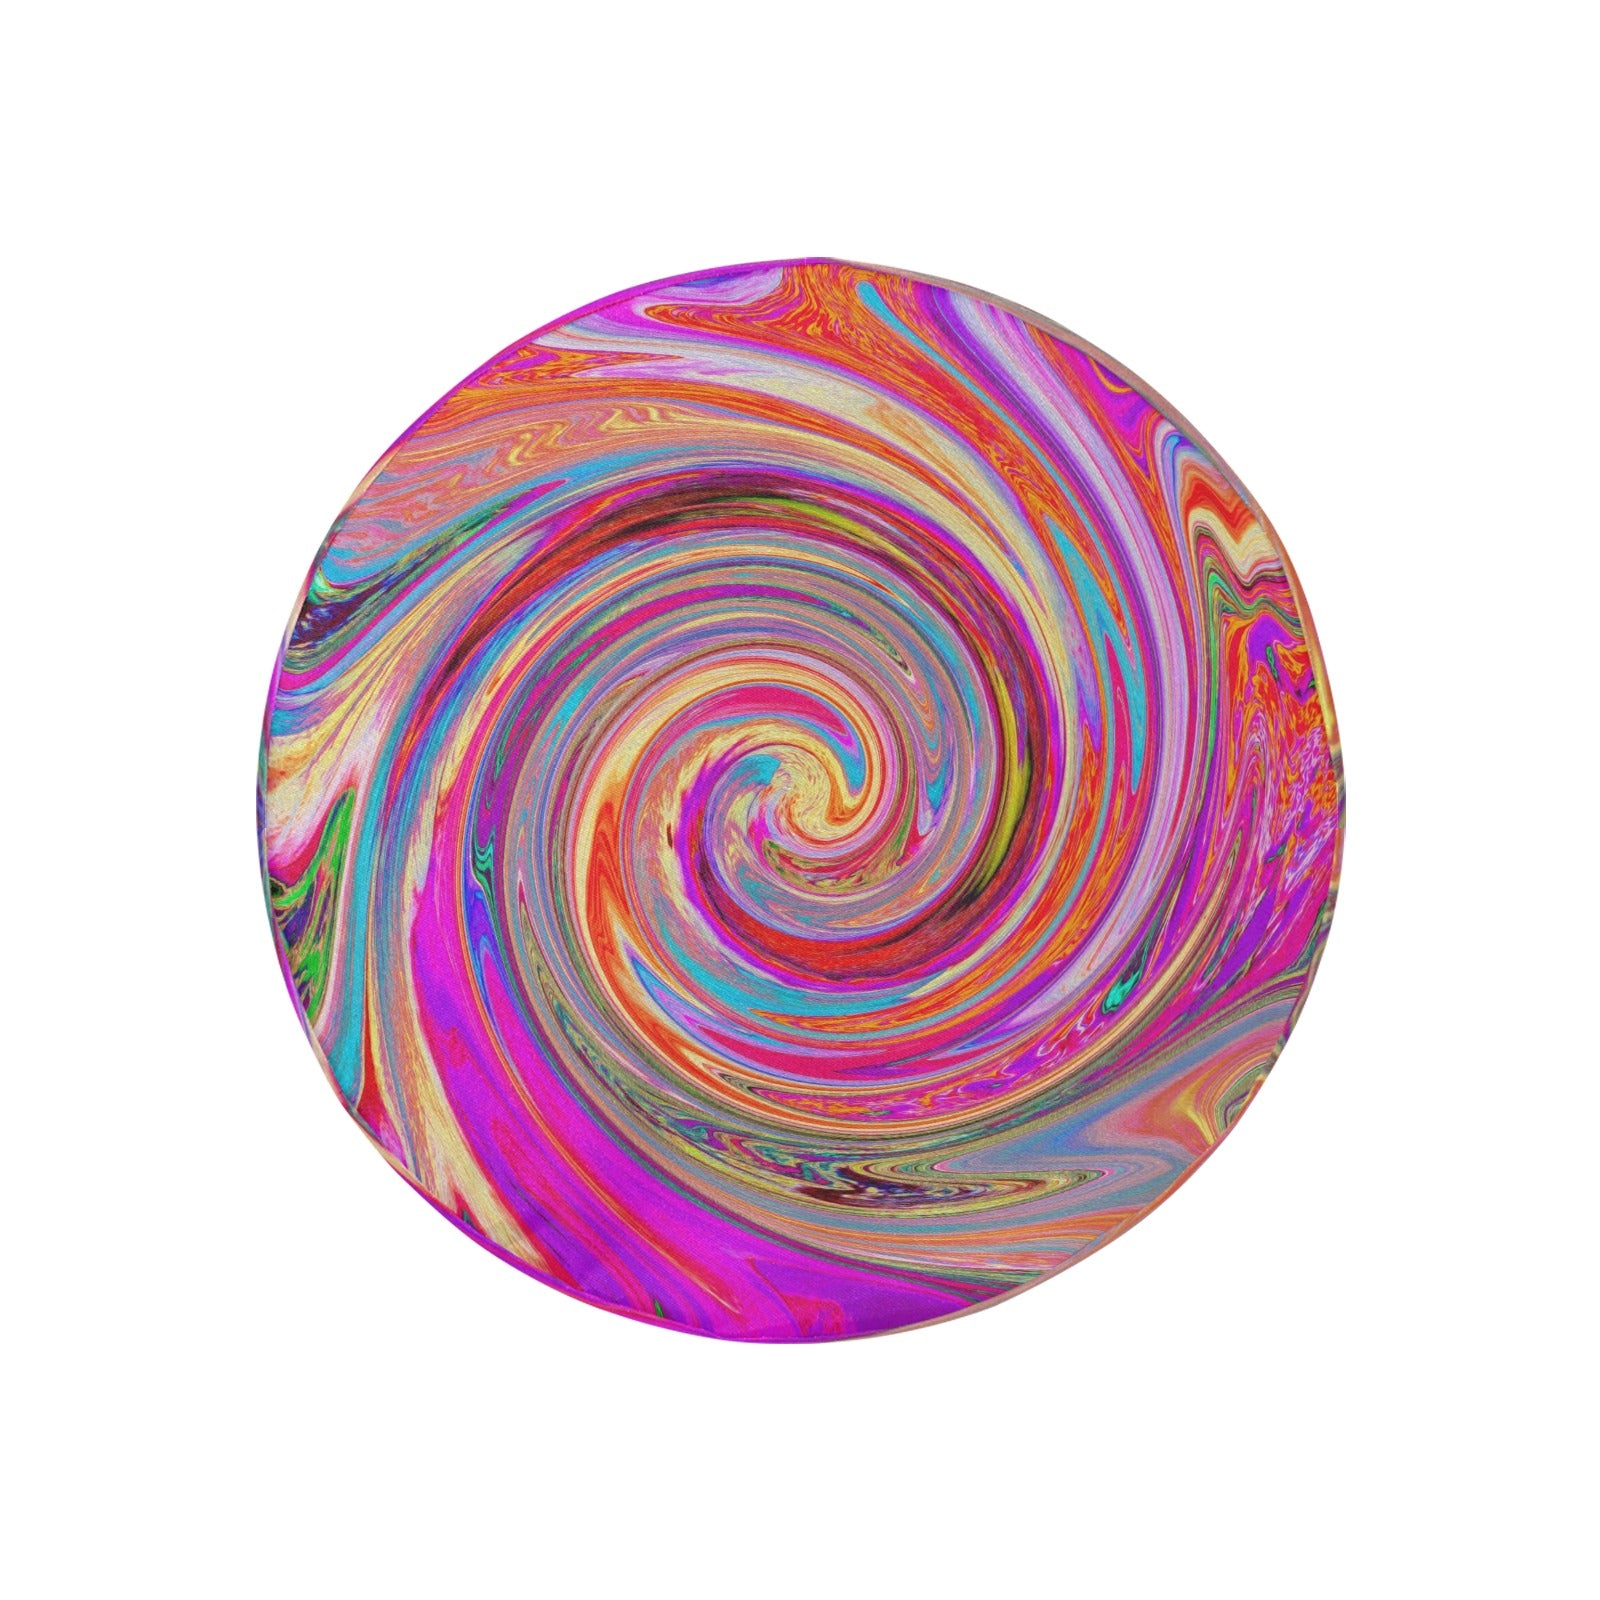 Spare Tire Covers, Colorful Rainbow Swirl Retro Abstract Design - Small